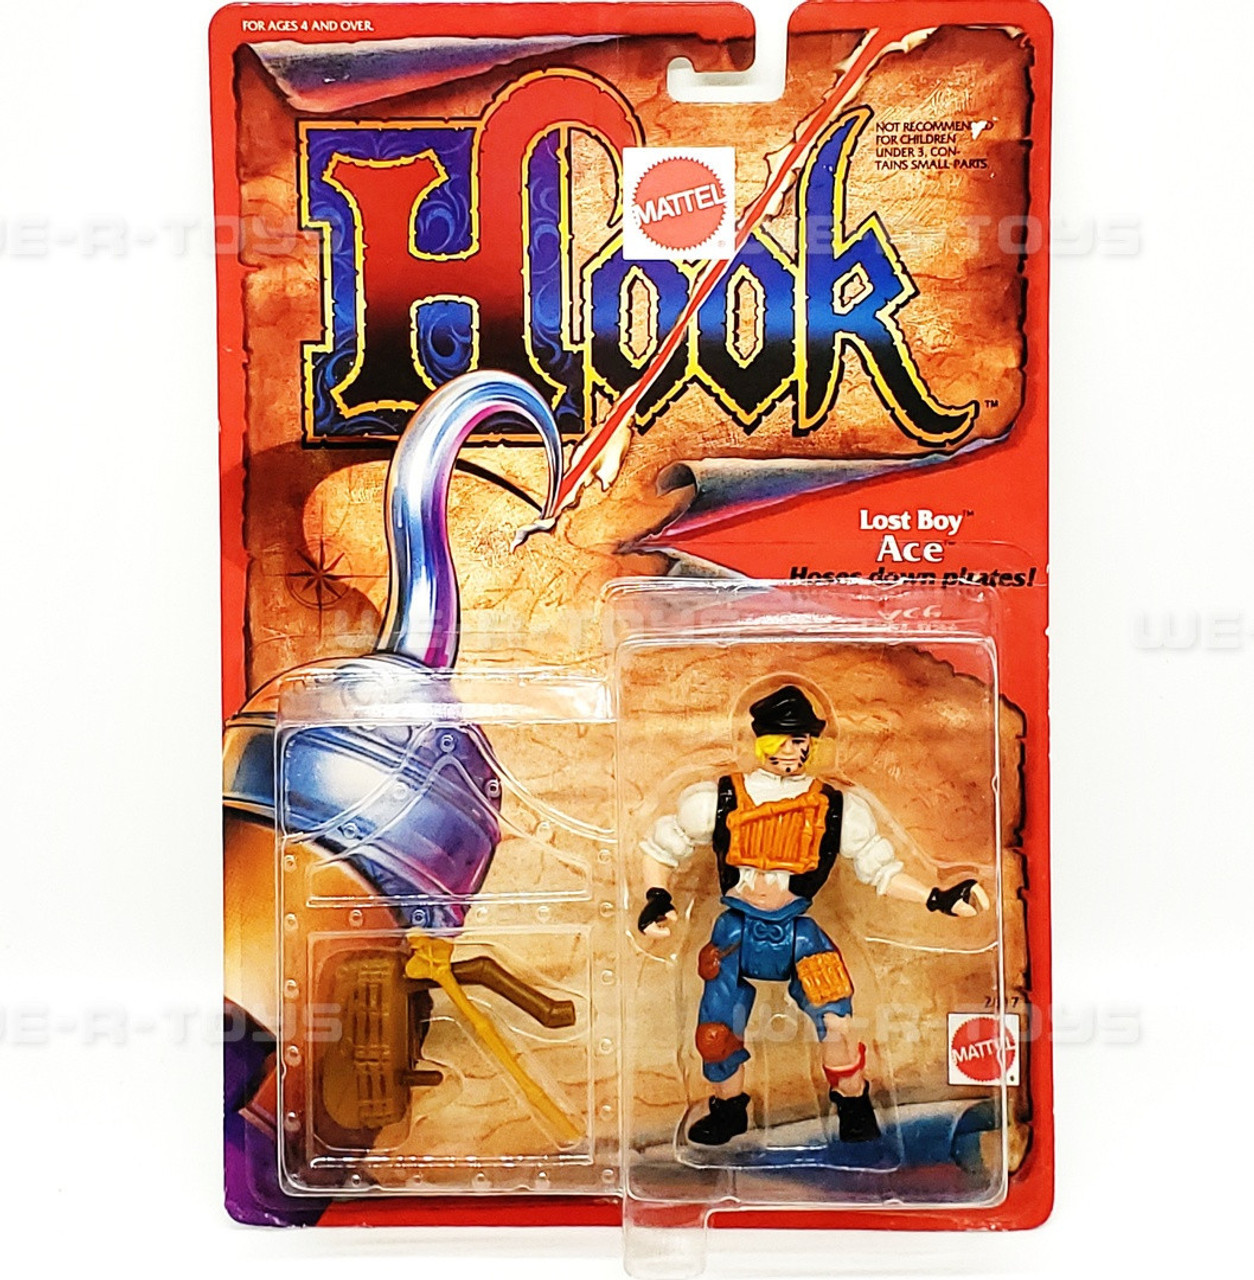 Mattel 1991 Hook Lost Boy Ace Hoses Down Pirates Action Figure Moc New 海外  即決